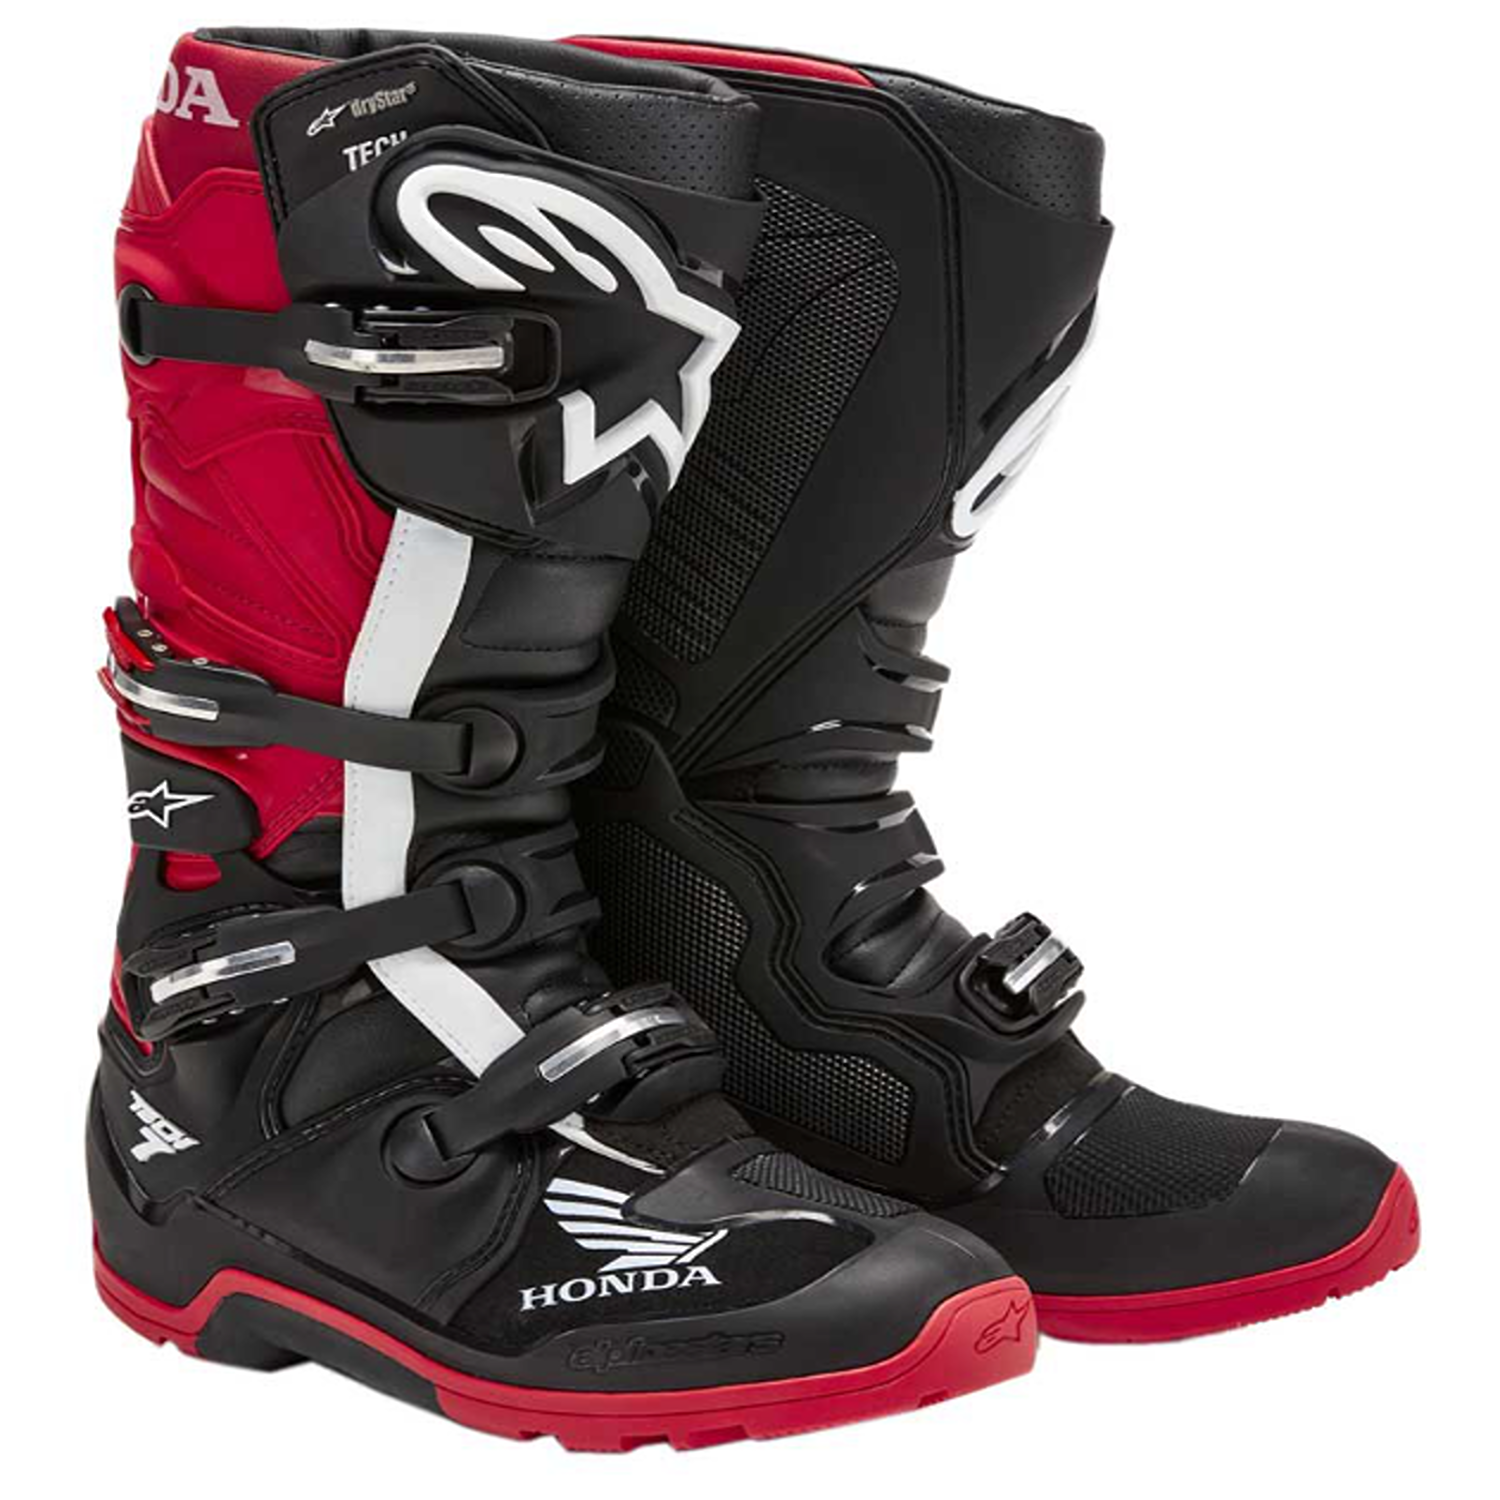 Image of Alpinestars Honda Tech 7 Enduro Drystar Boots Black Bright Red Taille US 10